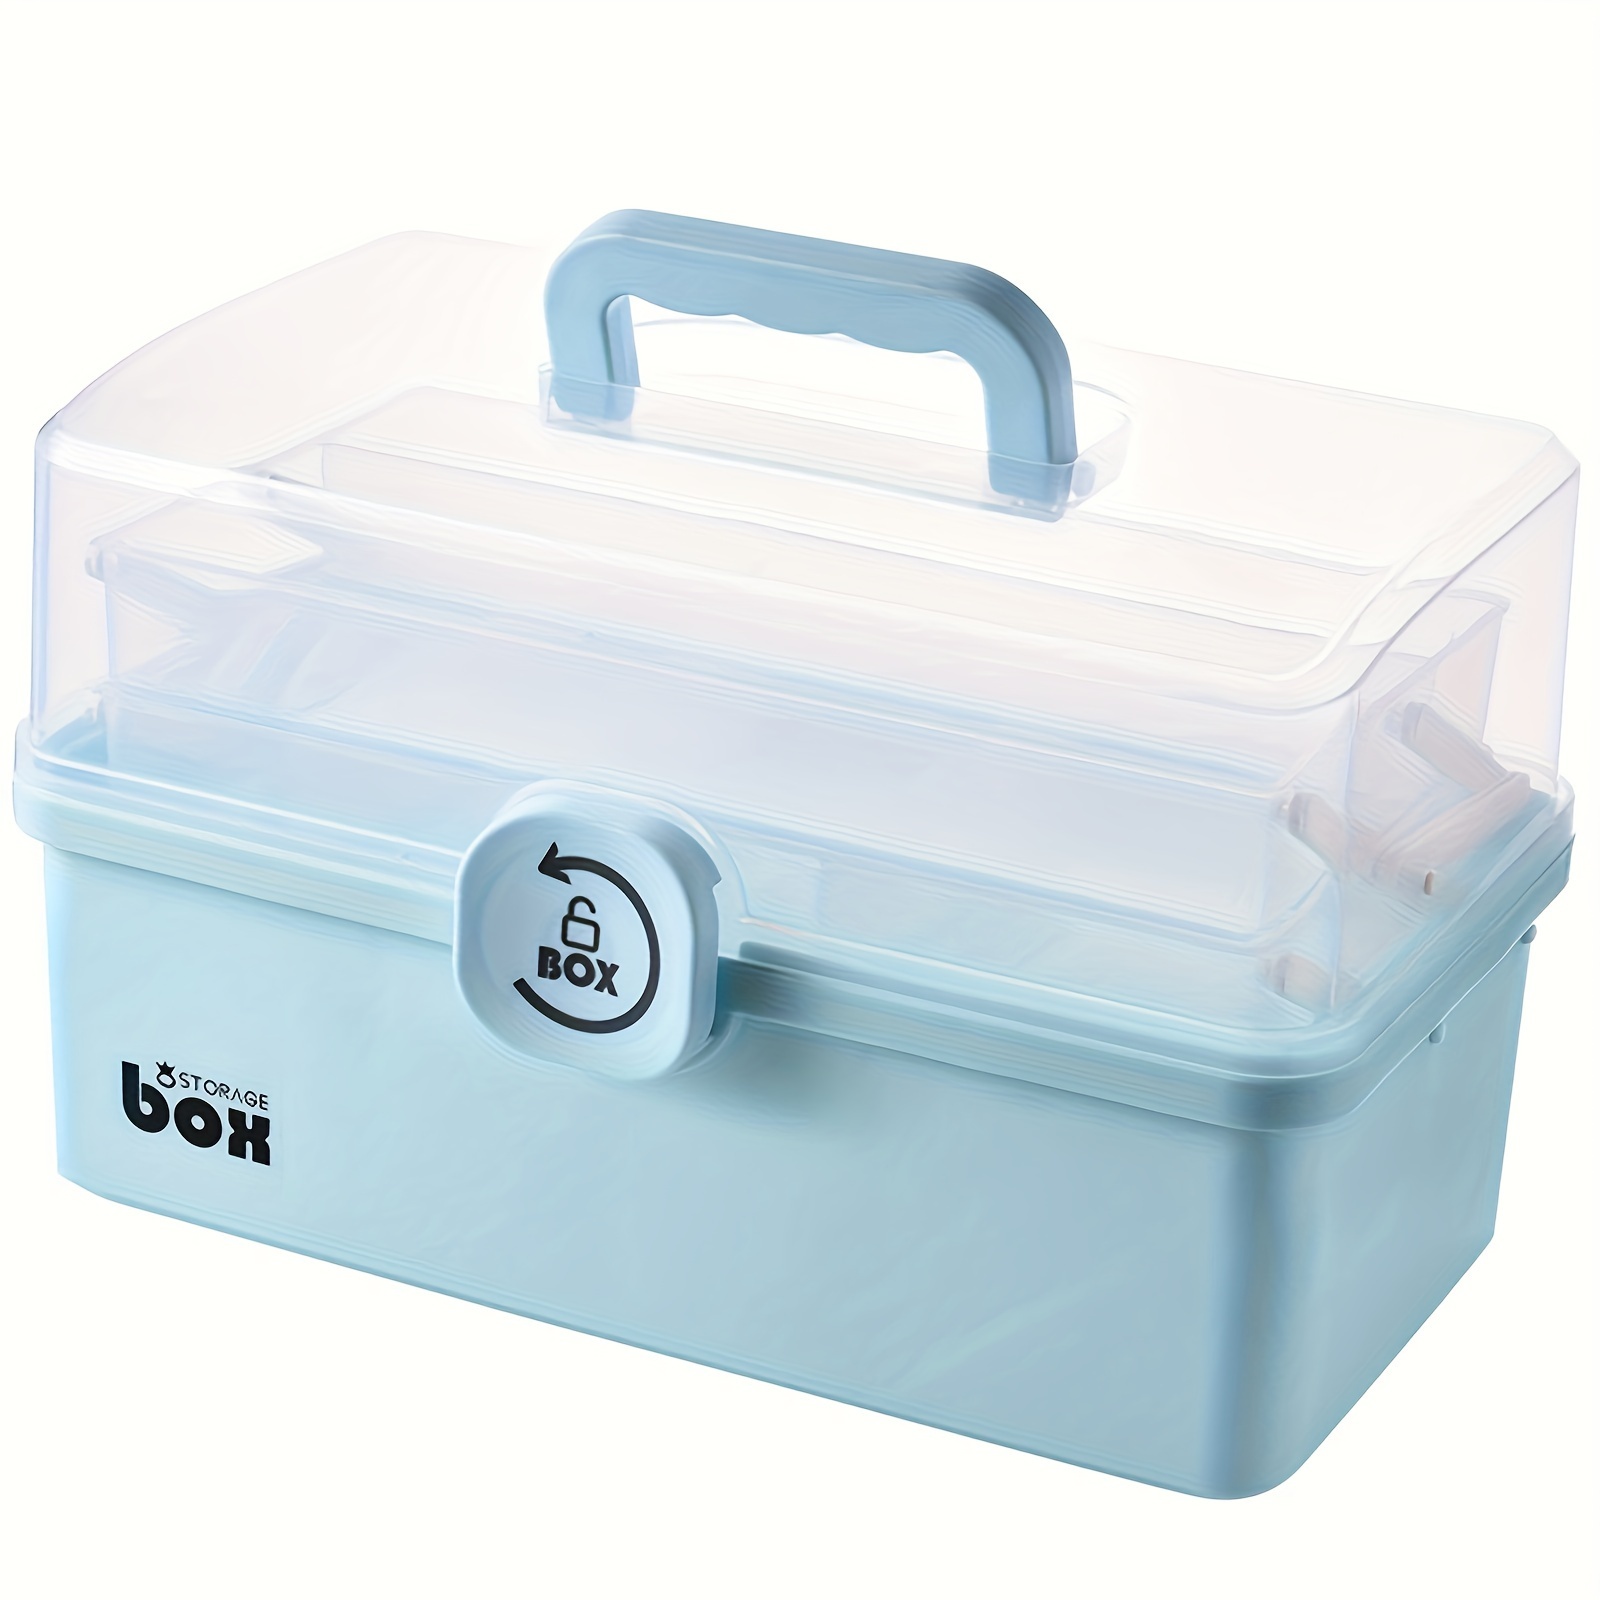 Liangduo Craft Caddy Box,Plastic Medicine Storage Box,Portable 3